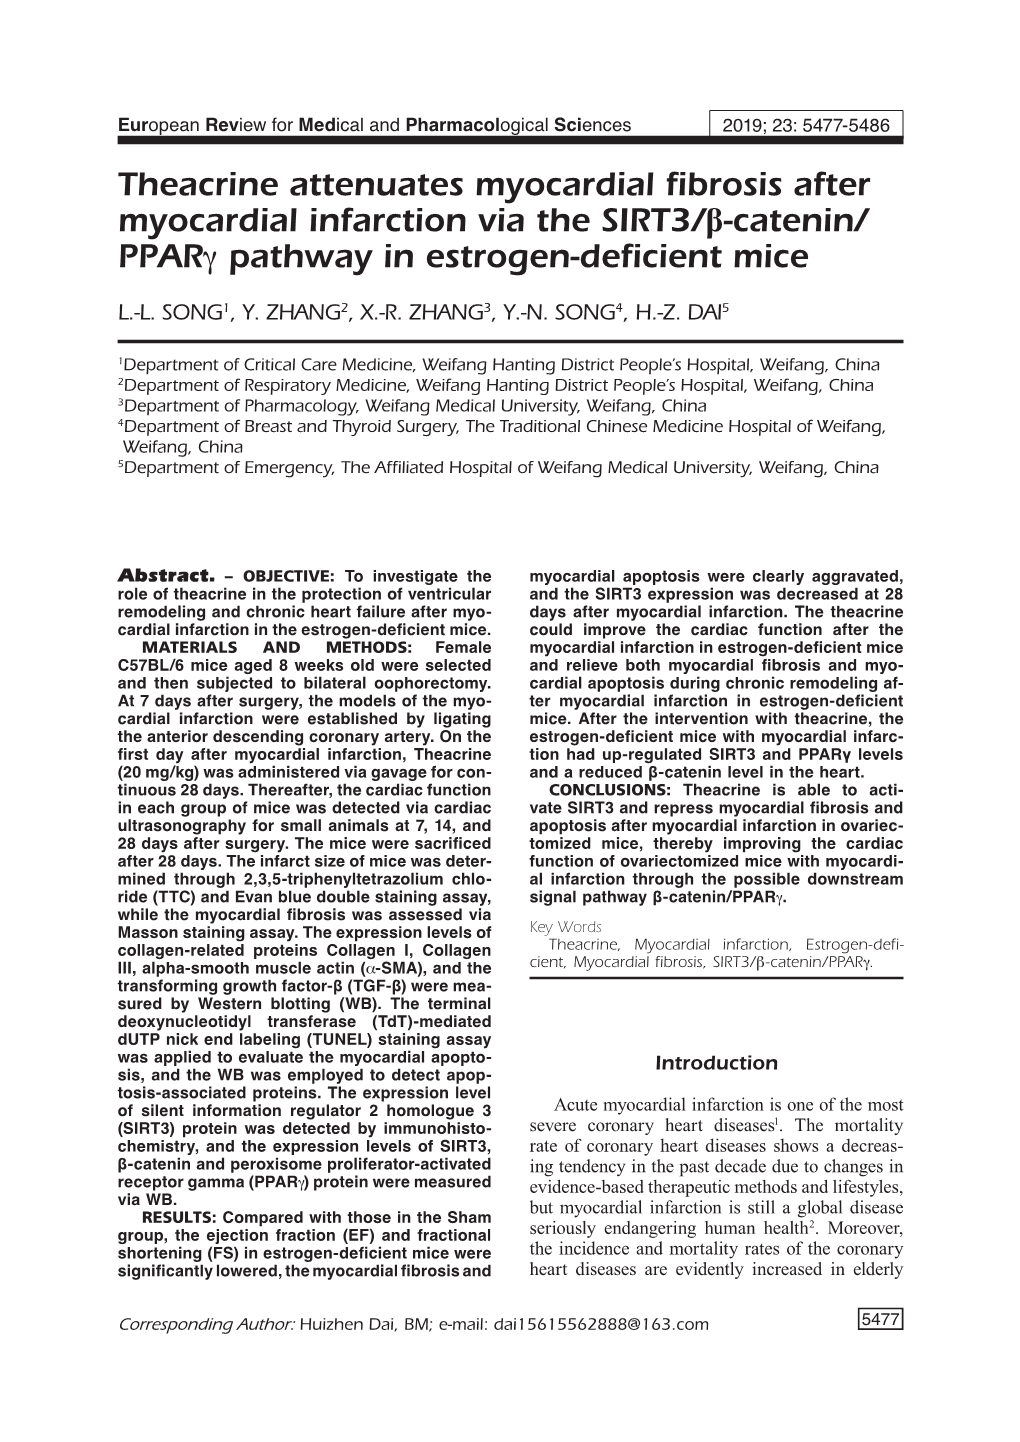 Theacrine Attenuates Myocardial Fibrosis After Myocardial Infarction Via the SIRT3/Β-Catenin/ Pparγ Pathway in Estrogen-Deficient Mice